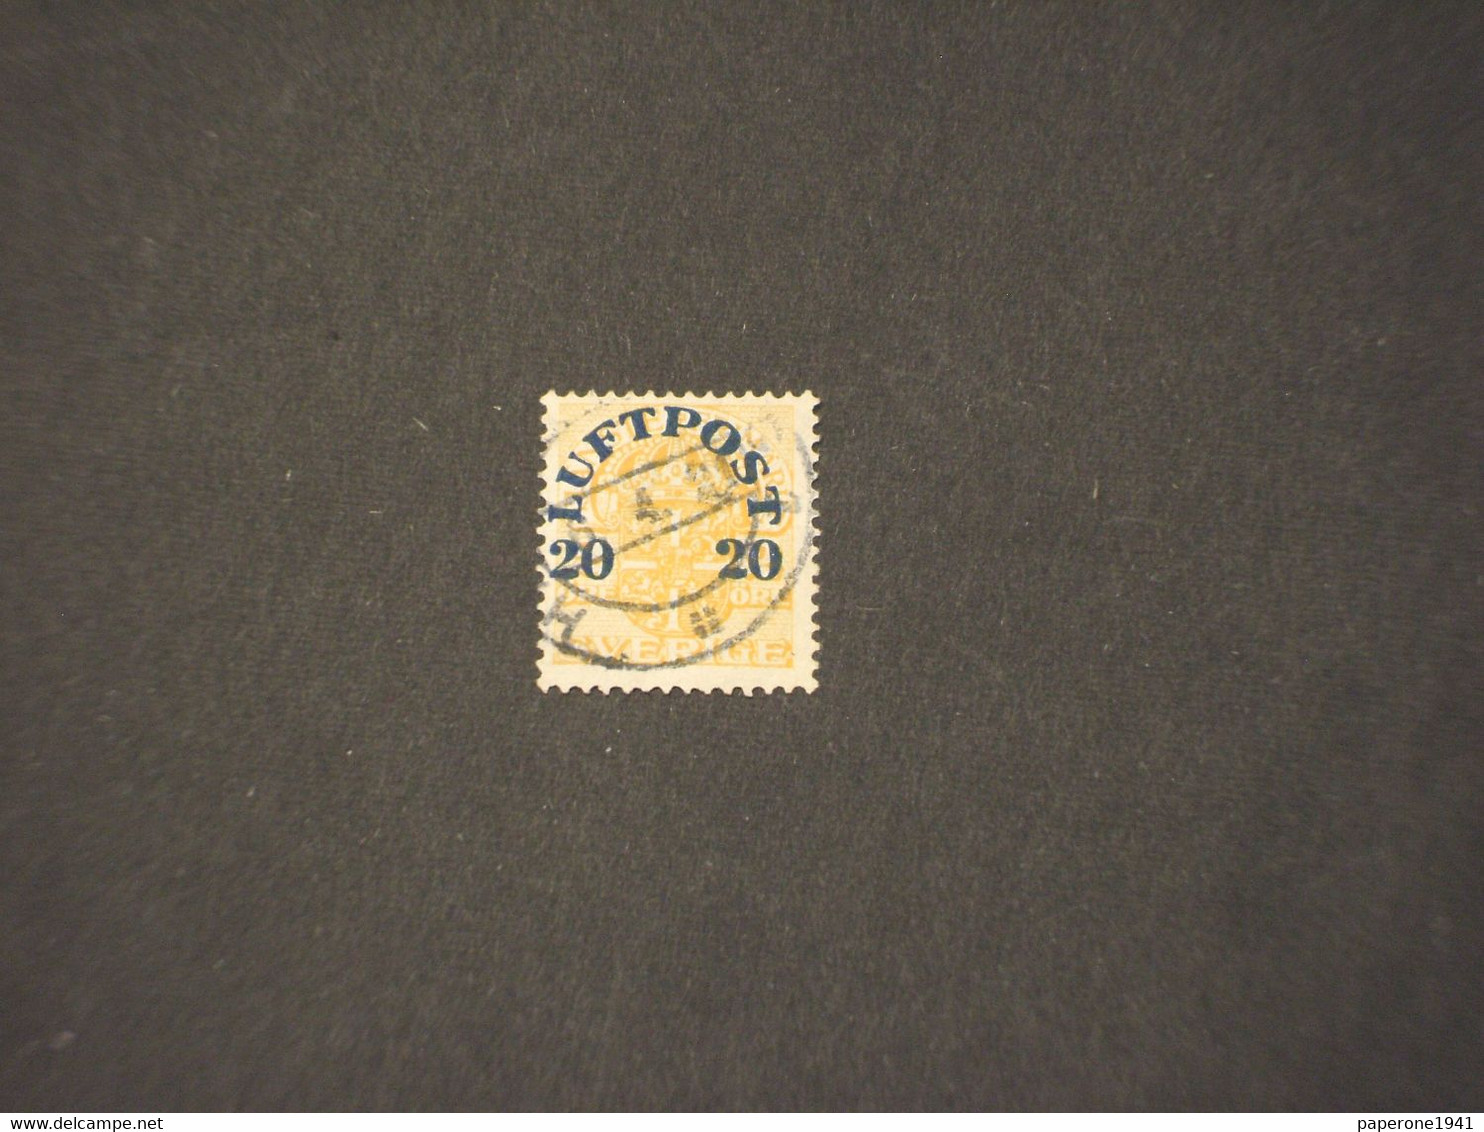 SVEZIA - P.A. 1920 LUFTPOST 20su2 - TIMBRATO/USED - Used Stamps